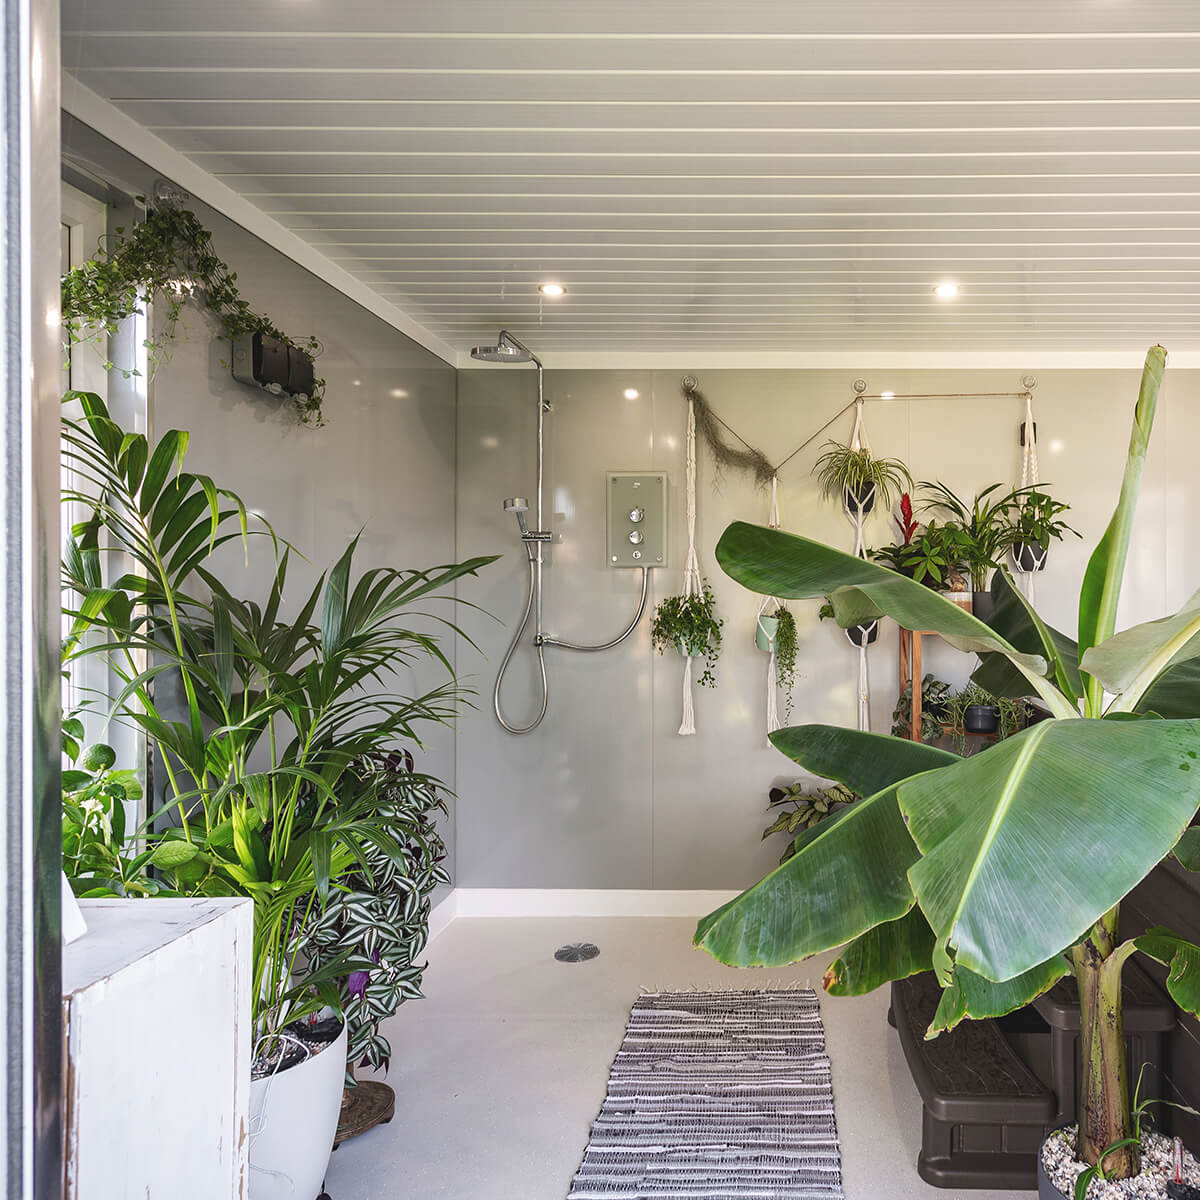 Cabin Master Hydropool Midlands Hot Tub Room with Indoor Plants 